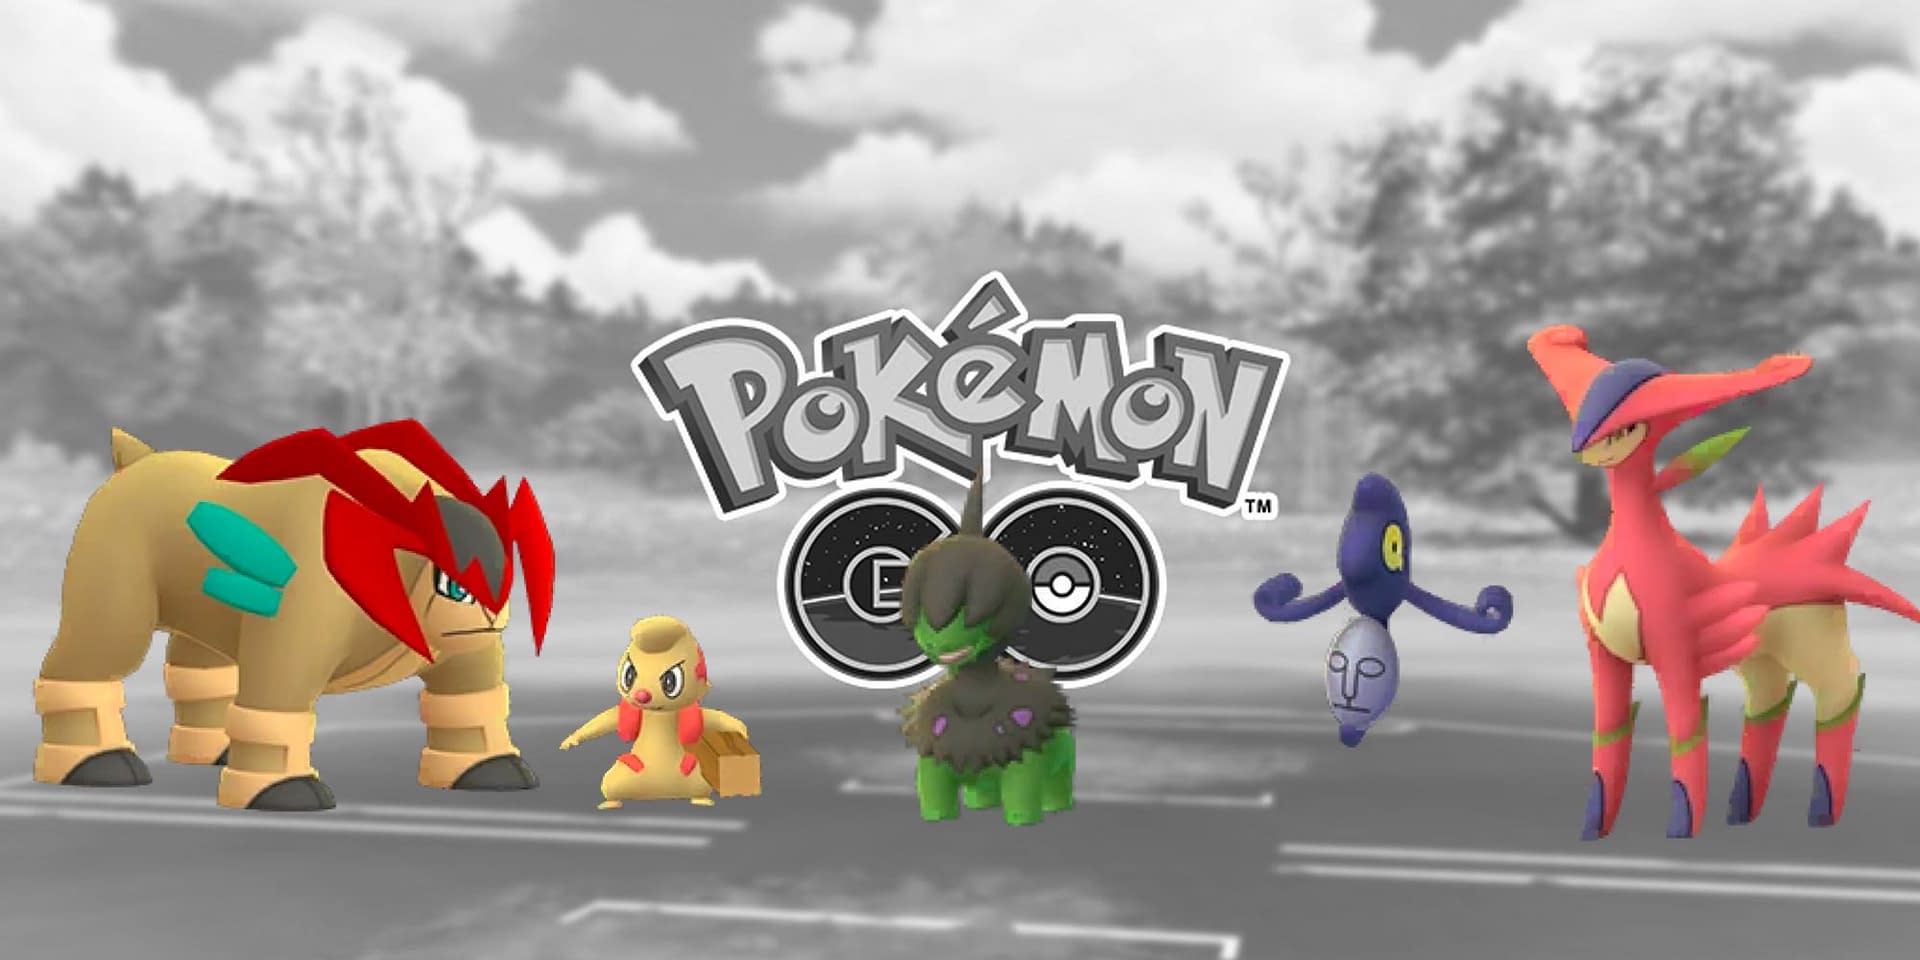 Pokemon Go: Catch This Gen 5 Legendary During The December Event